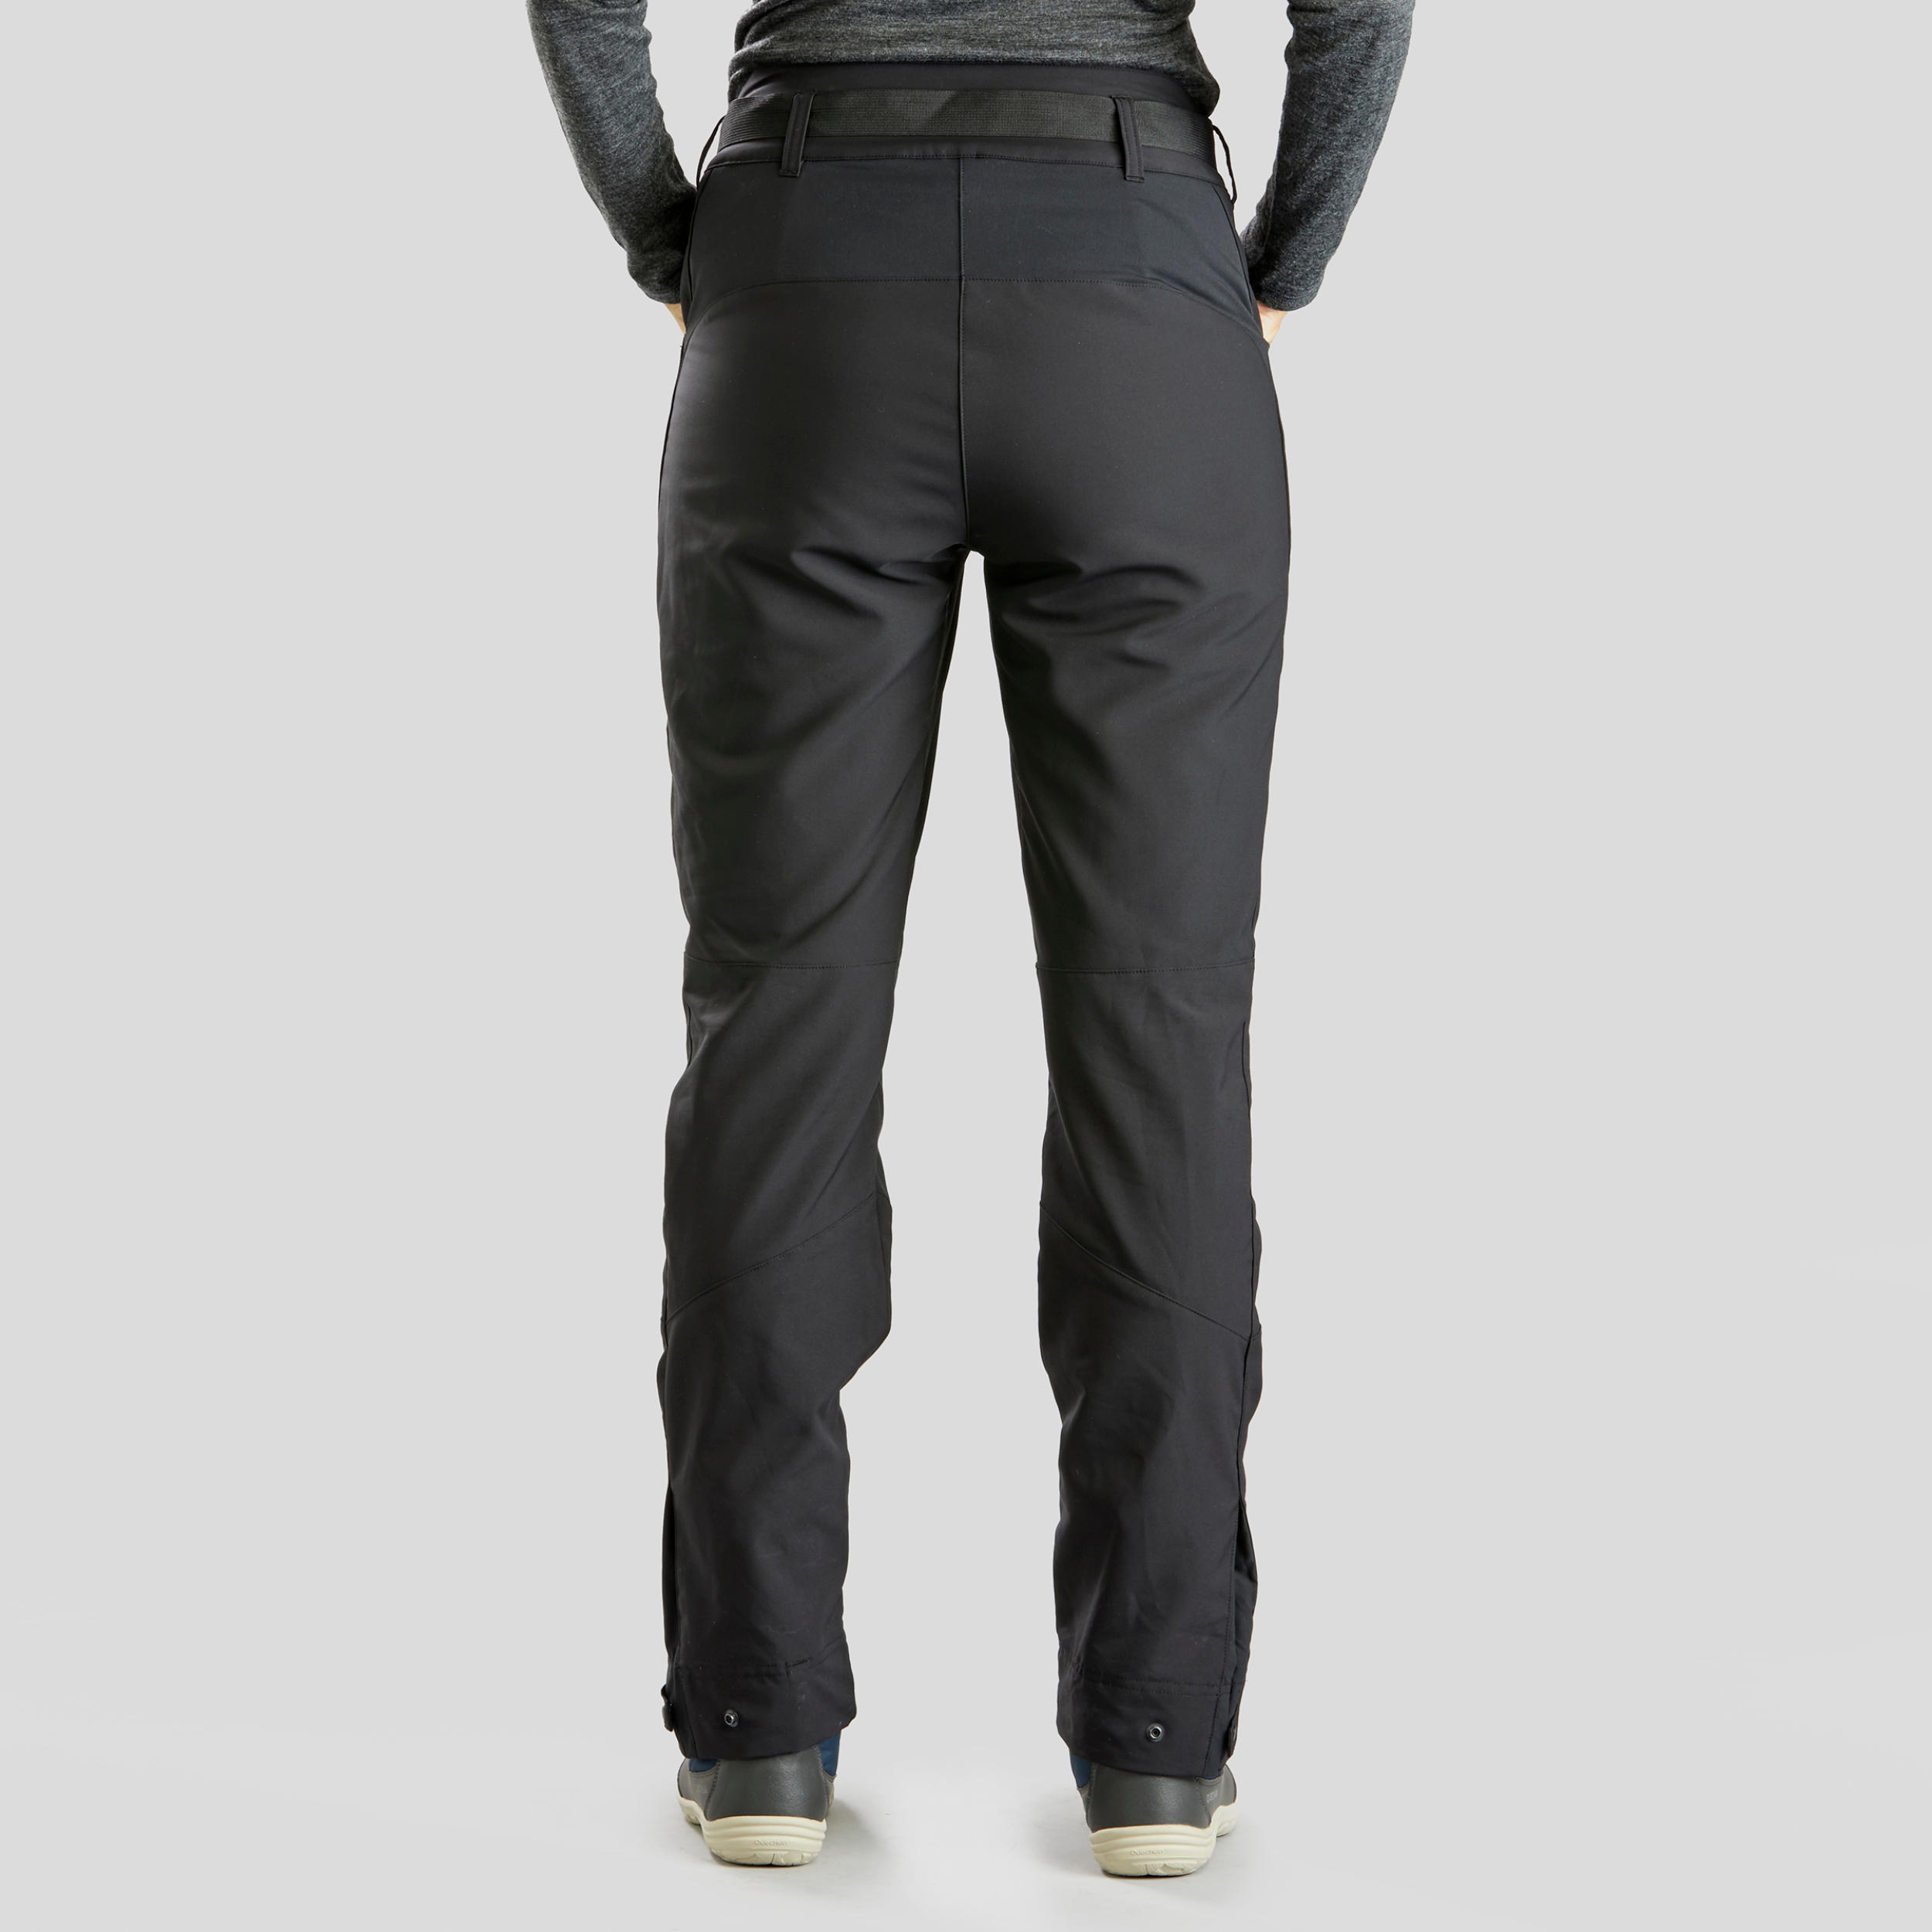 Women's Warm Pants - SH 500 Black - Carbon grey - Quechua - Decathlon